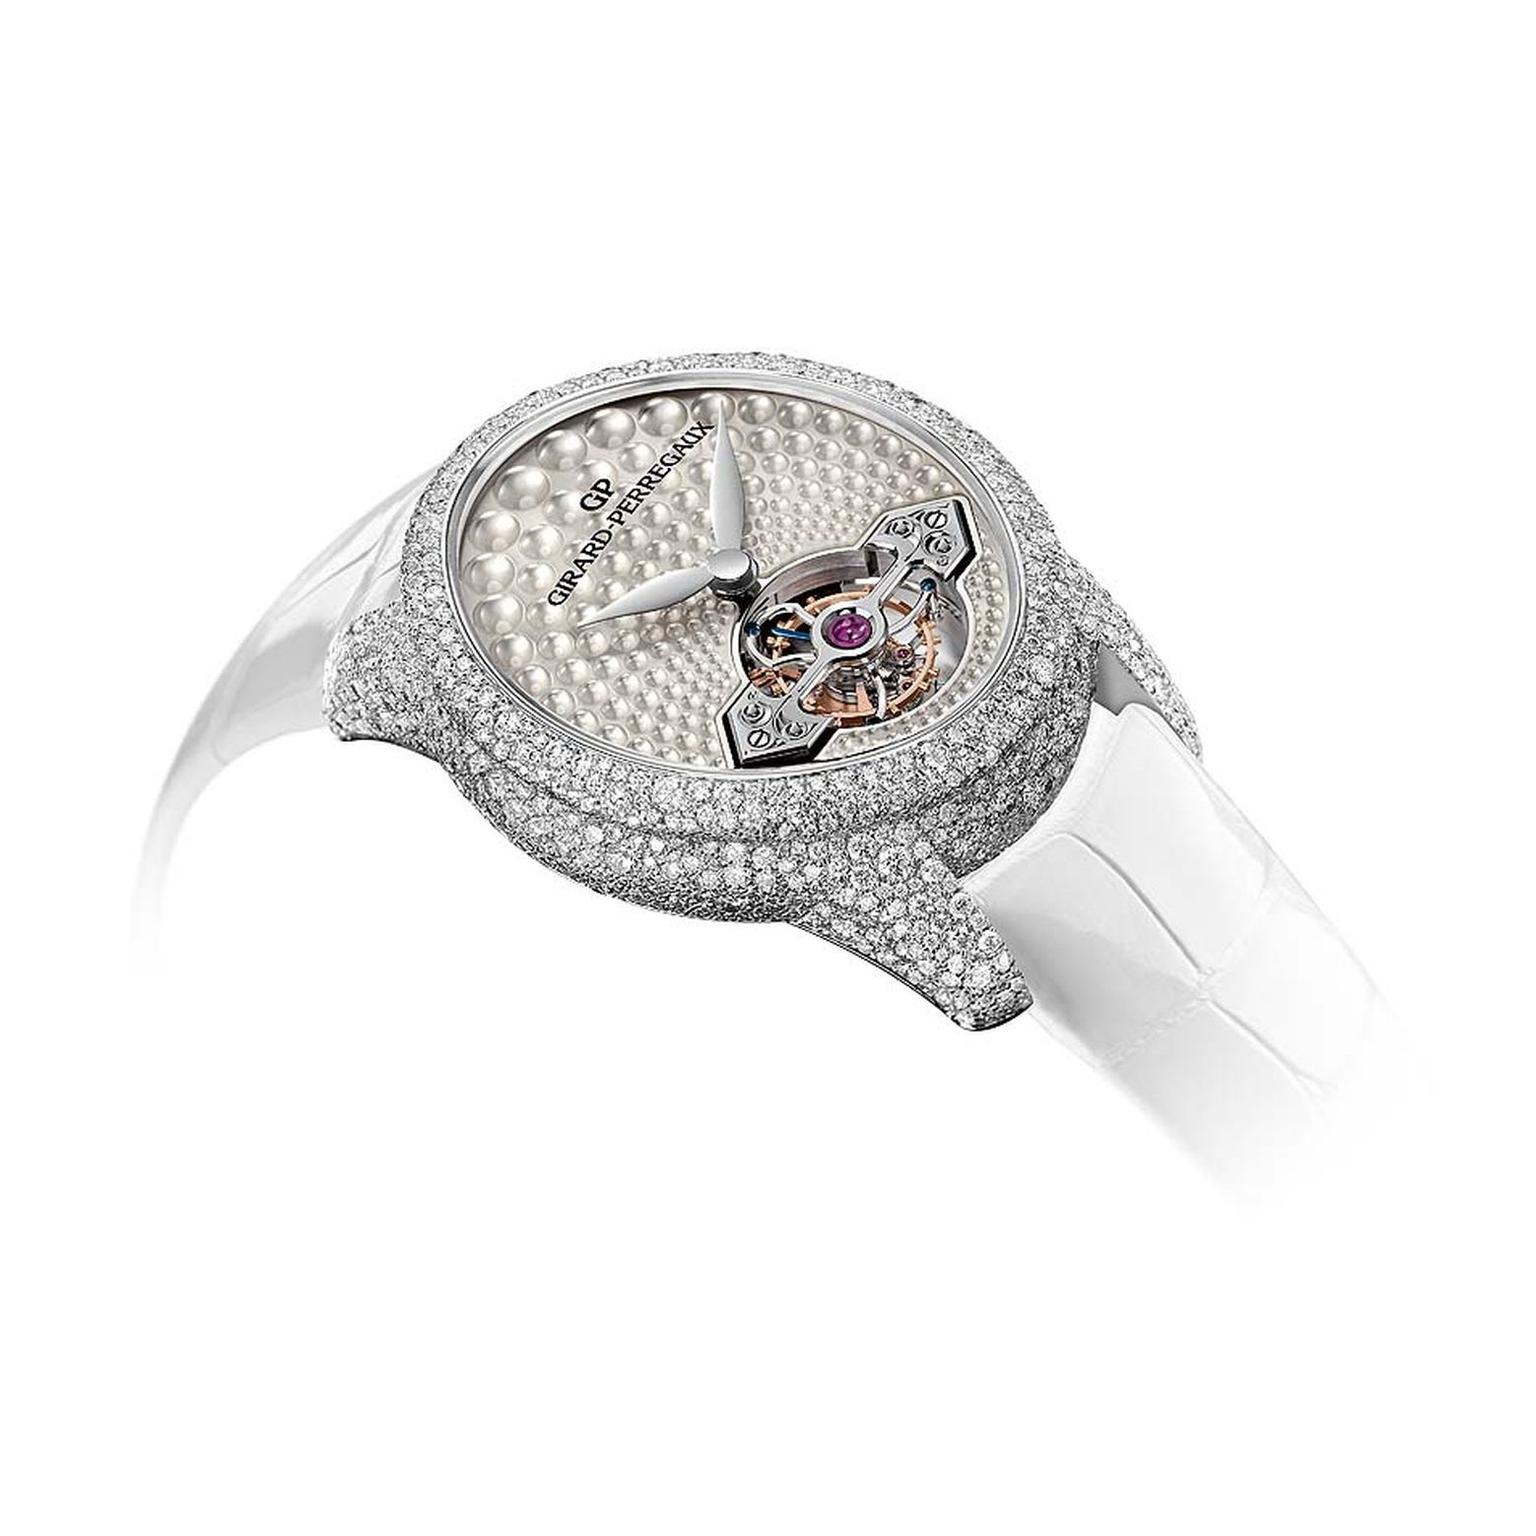 Girard-Perregaux Cat's Eye diamond watch